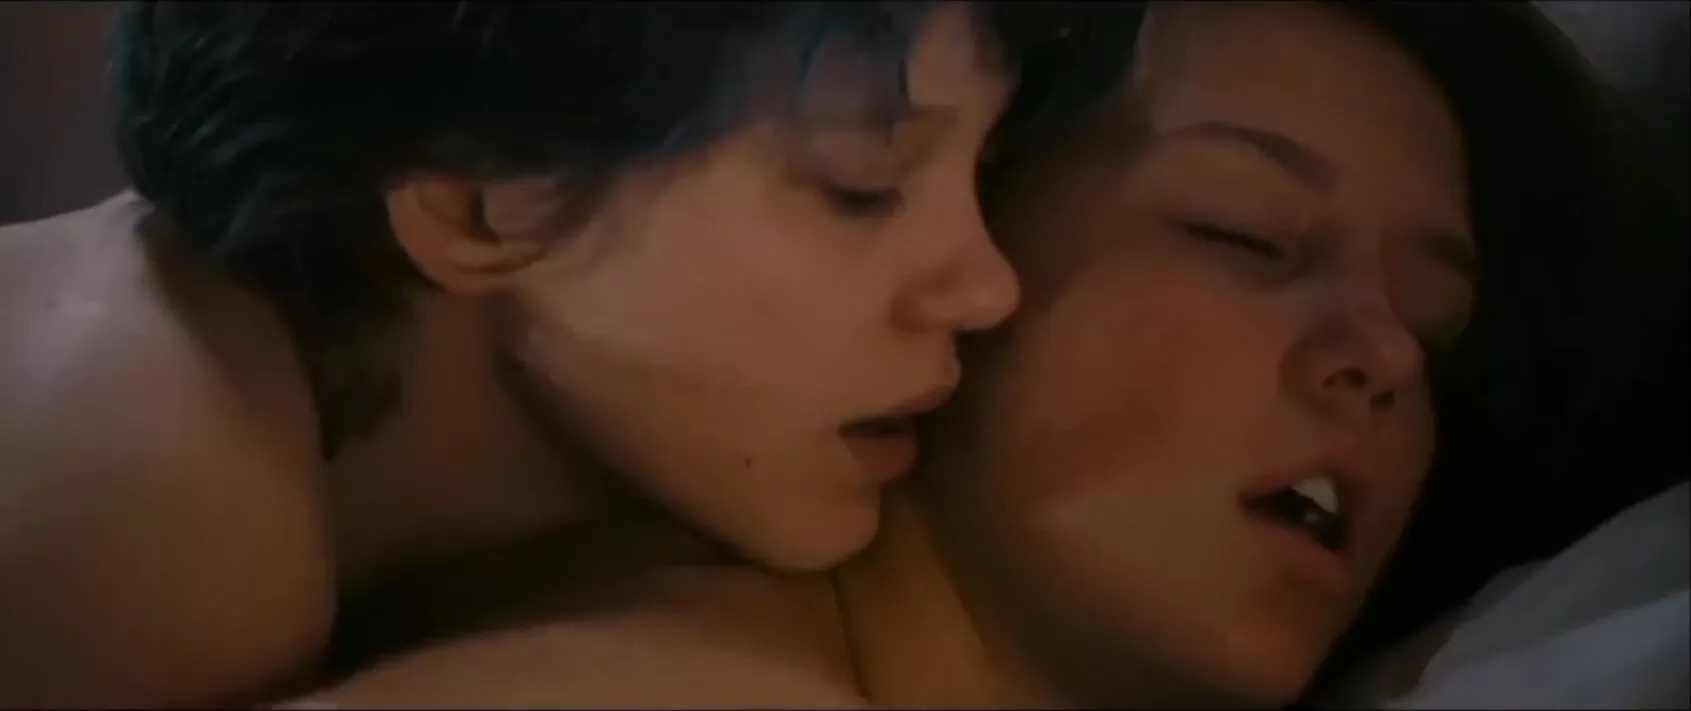 Hot lesbian sex scene part 3 watch online